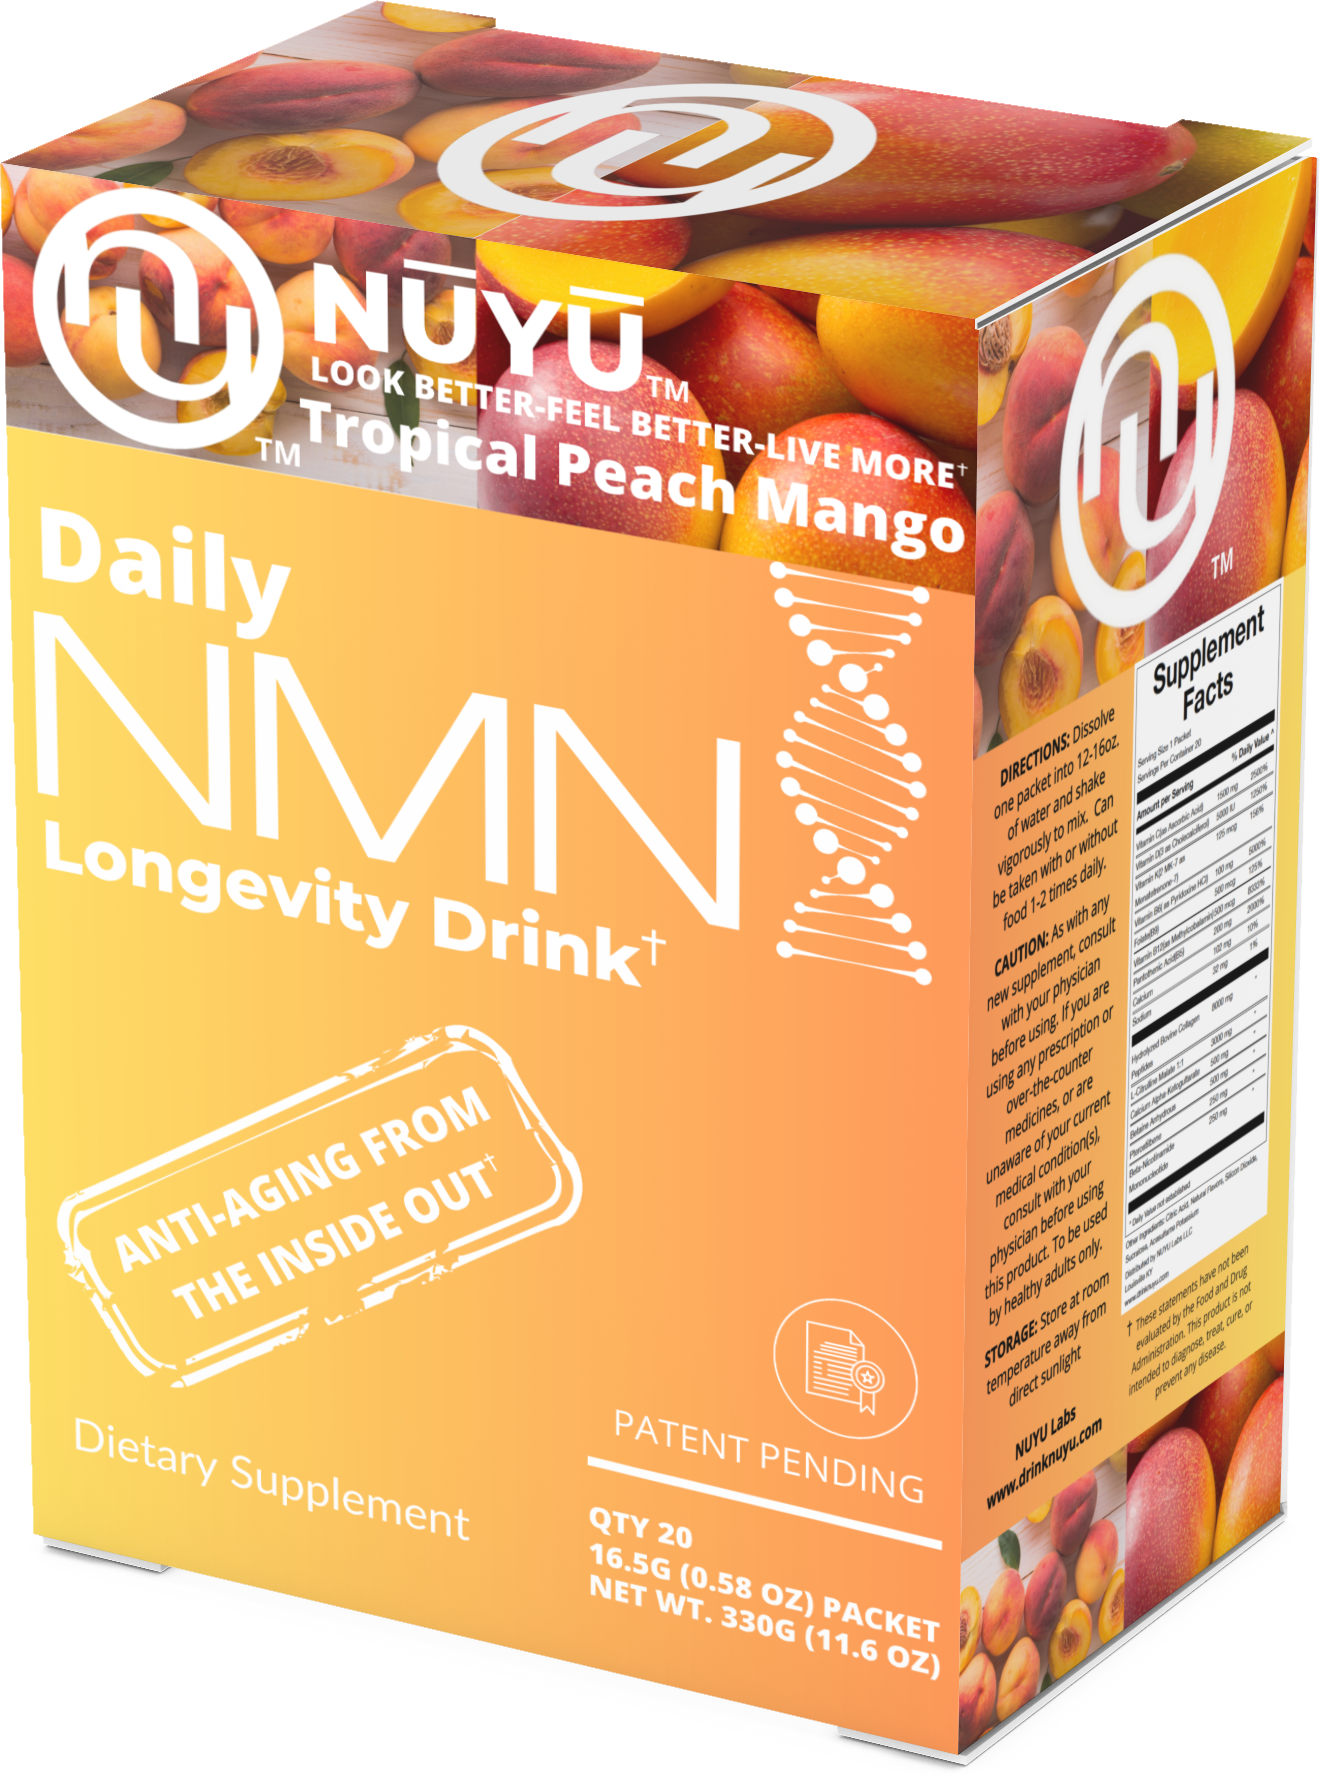 NŪYŪ Daily NMN™ Longevity Drink-Tropical Peach Mango